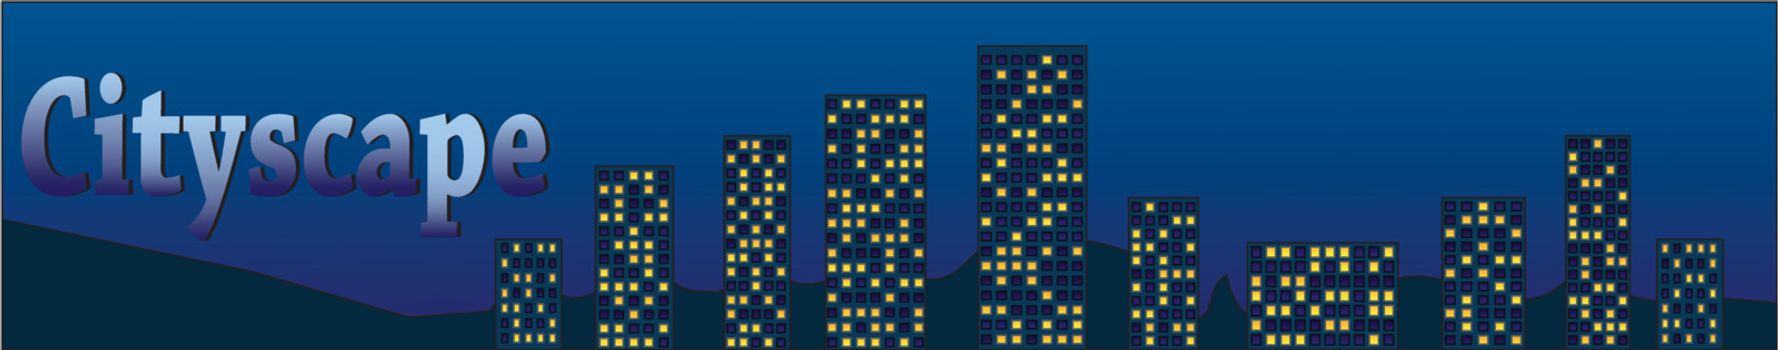 blue cityscape banner vector illustration